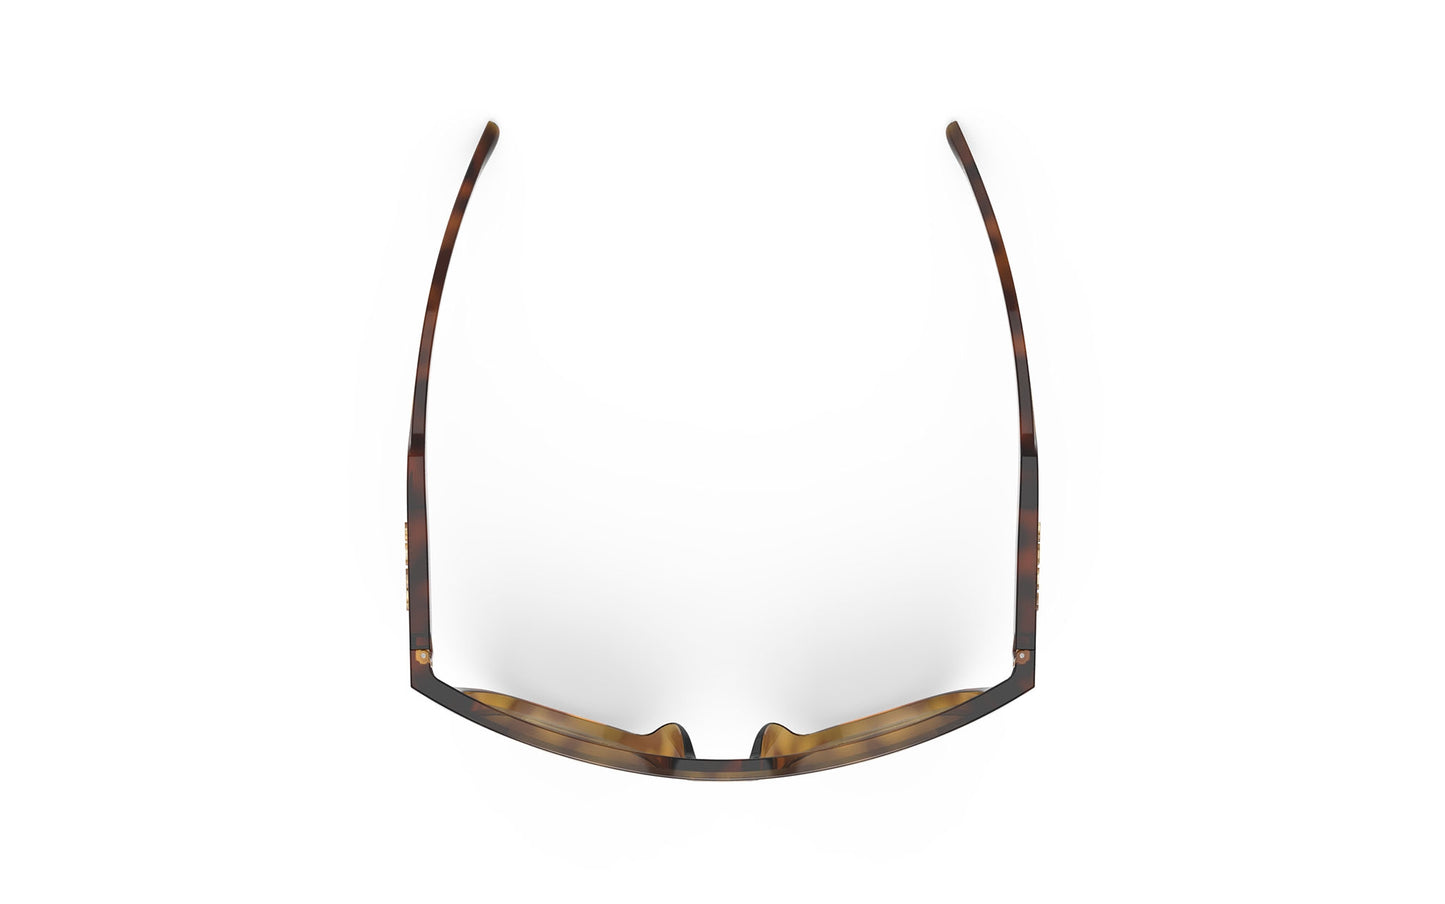 Rudy Project Soundshield Demi Turtle Gloss - Rp Optics Brown Deg Sunglasses